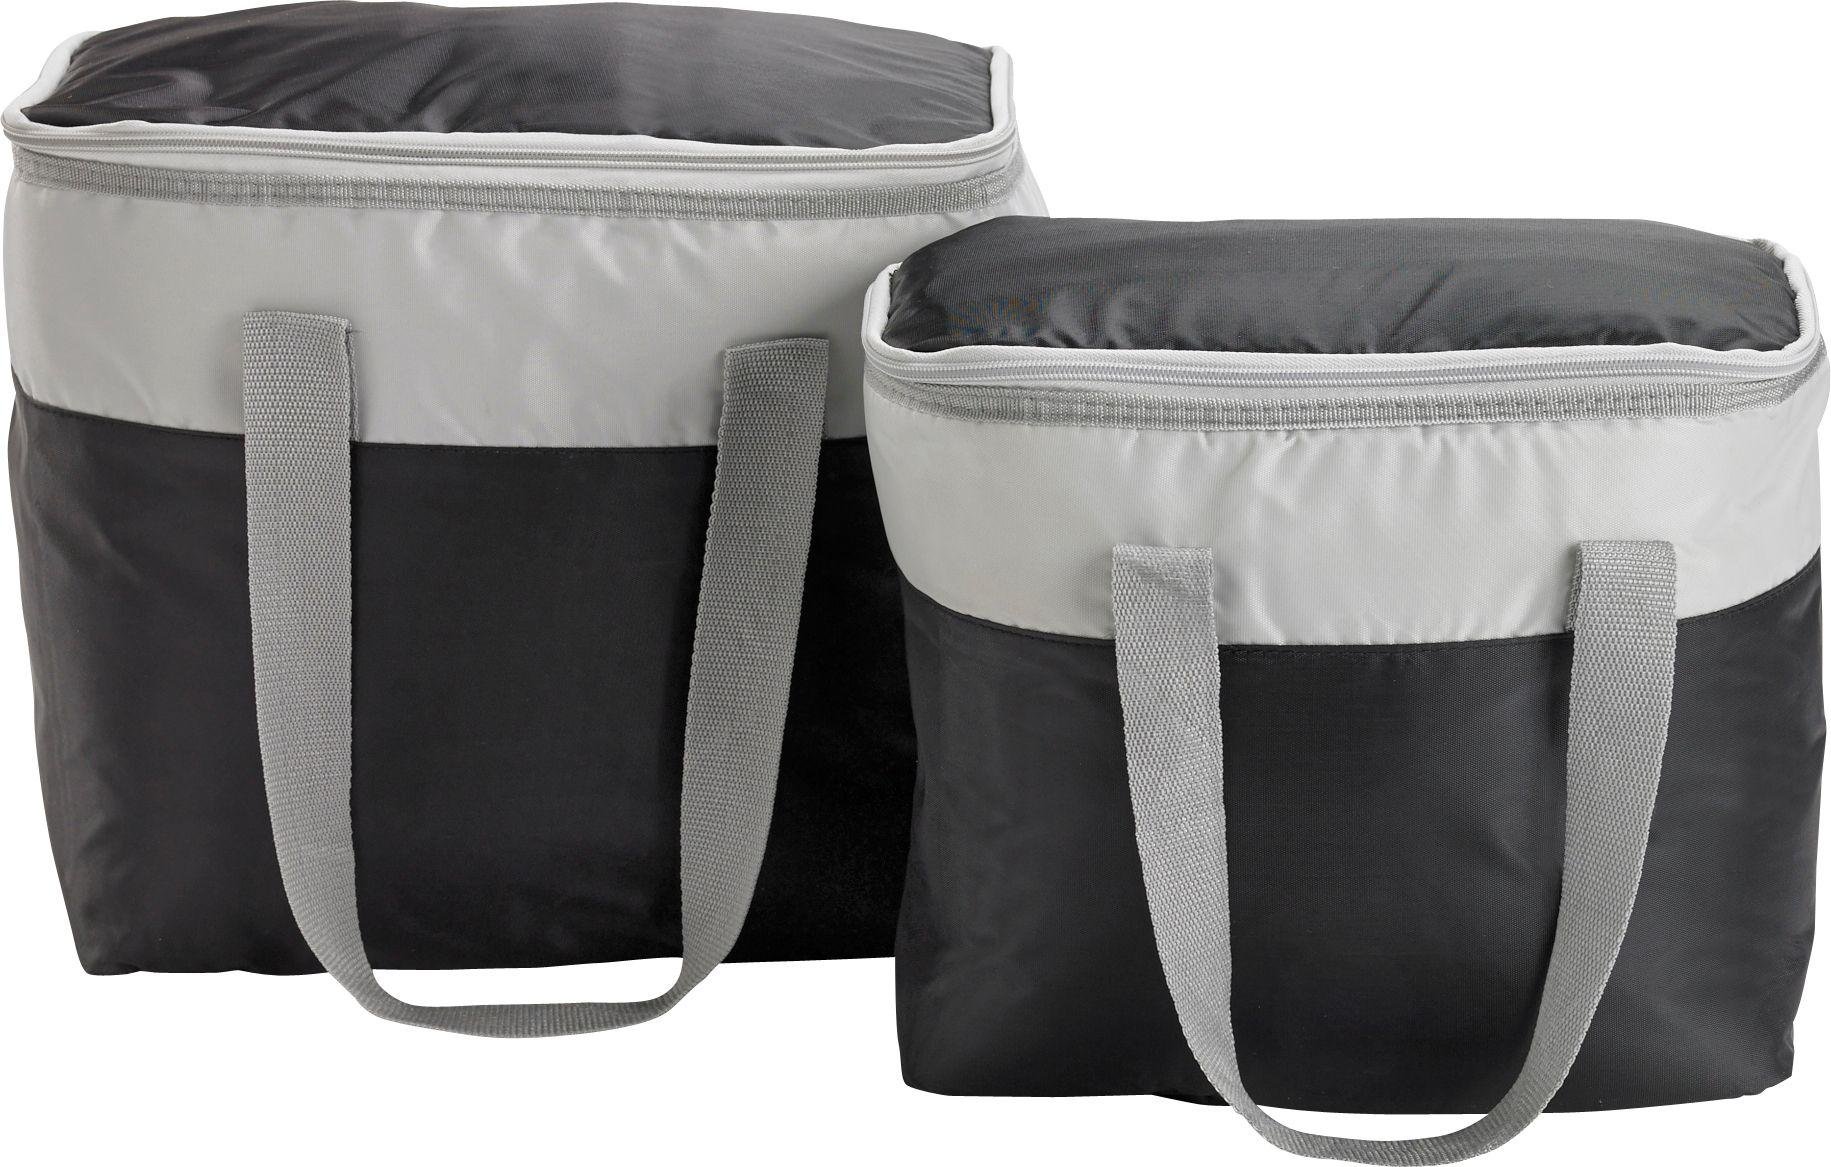 Buy Twin Cool Bag Set - 22L and 8L 